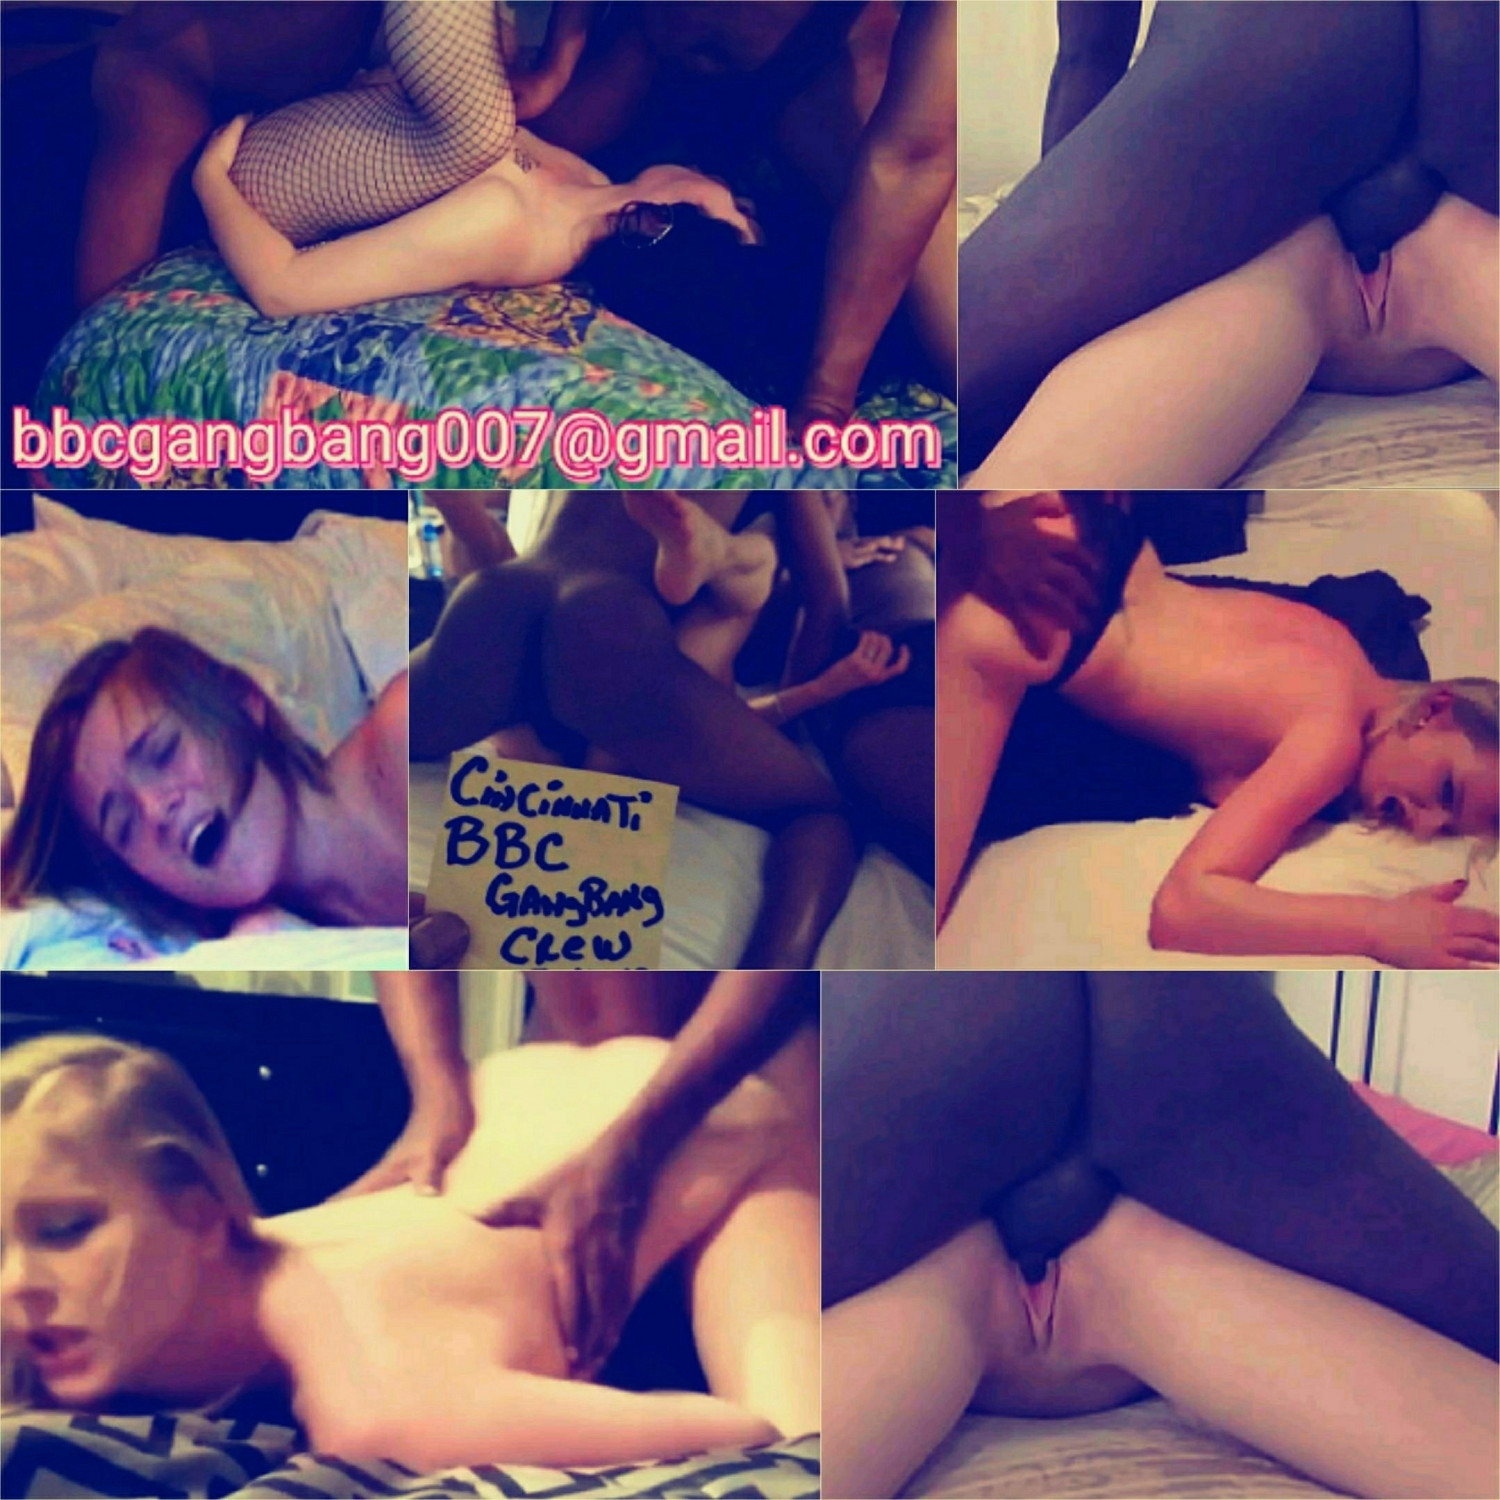 Amateur White Girls BBC Porn Teens for Black Cocks Kik Sexting... foto afbeelding